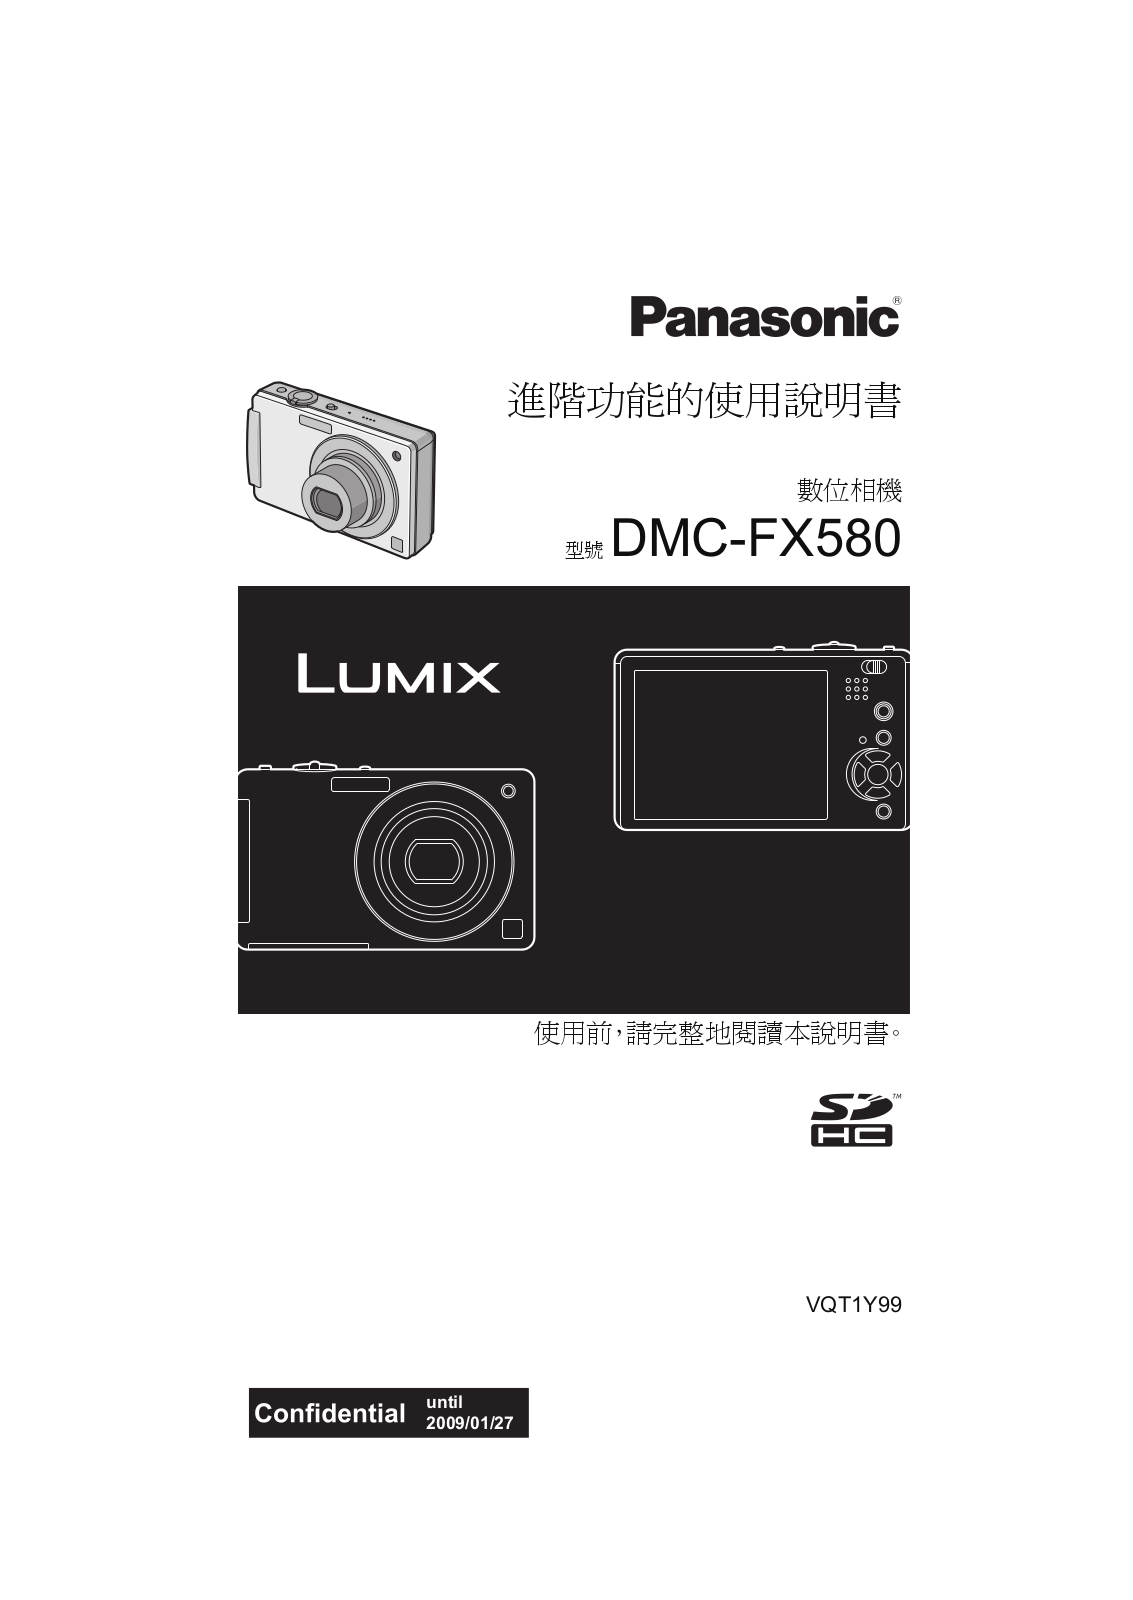 Panasonic LUMIX DMC-FX580 User Manual